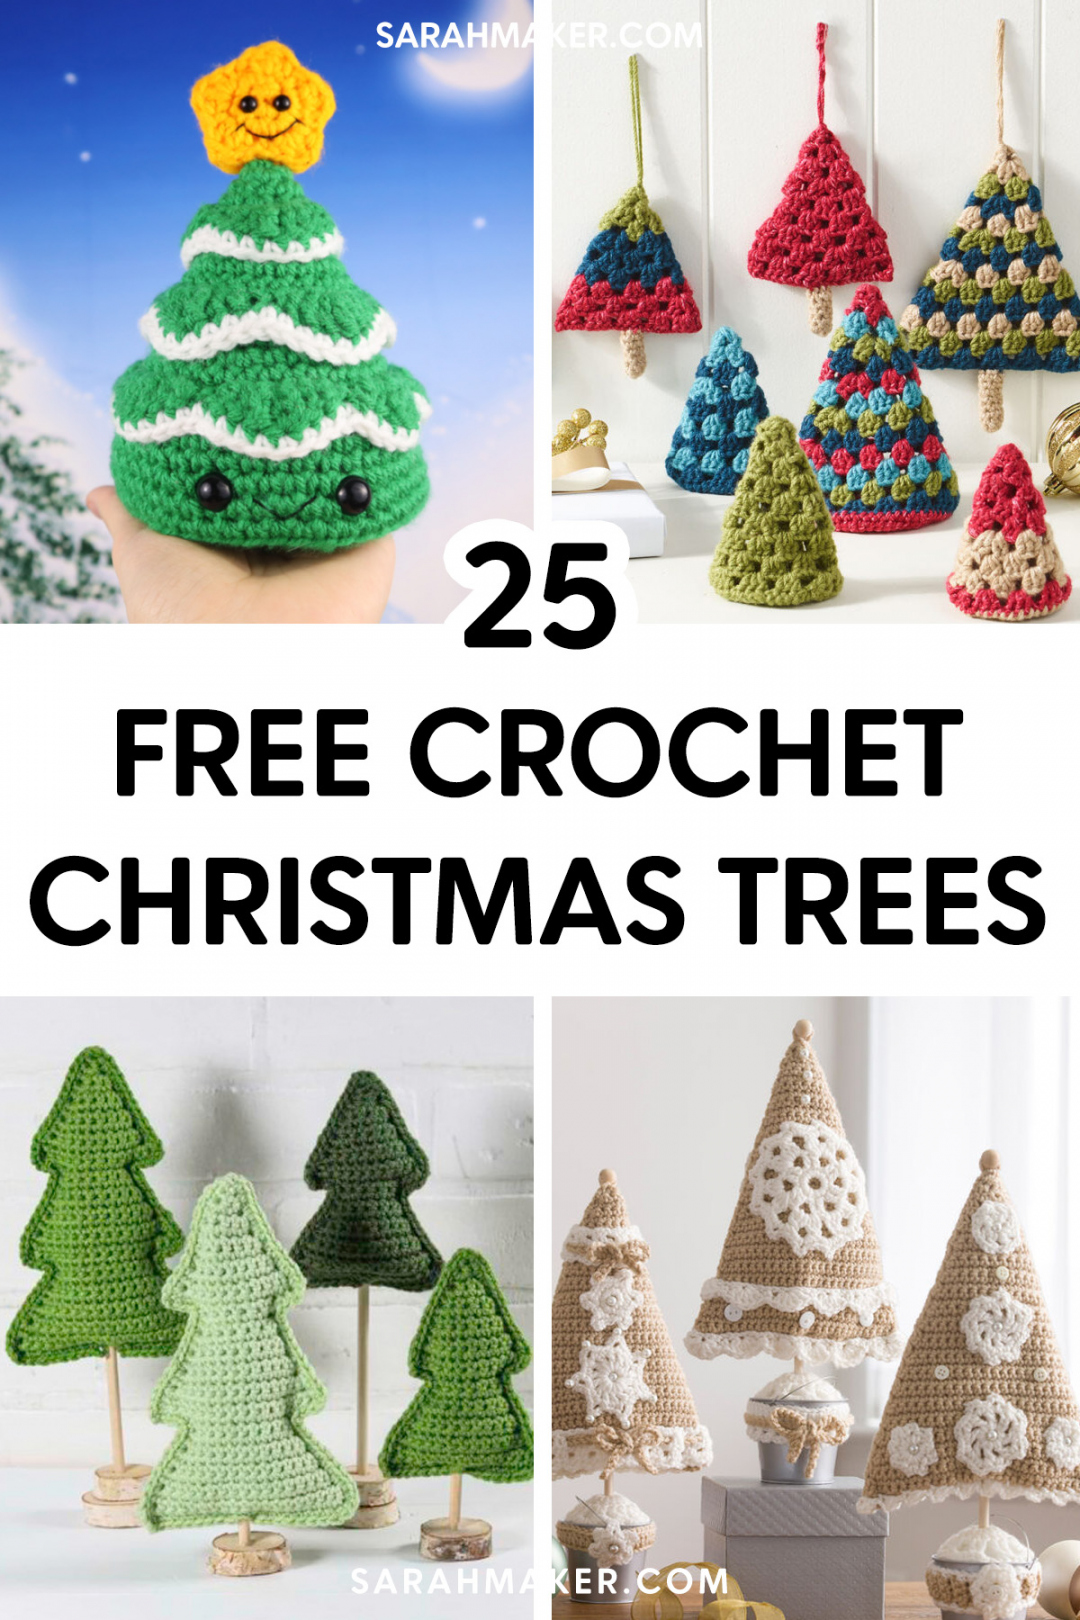 Free Crochet Christmas Tree Patterns - Sarah Maker - FREE Printables - Free Christmas Tree Patterns